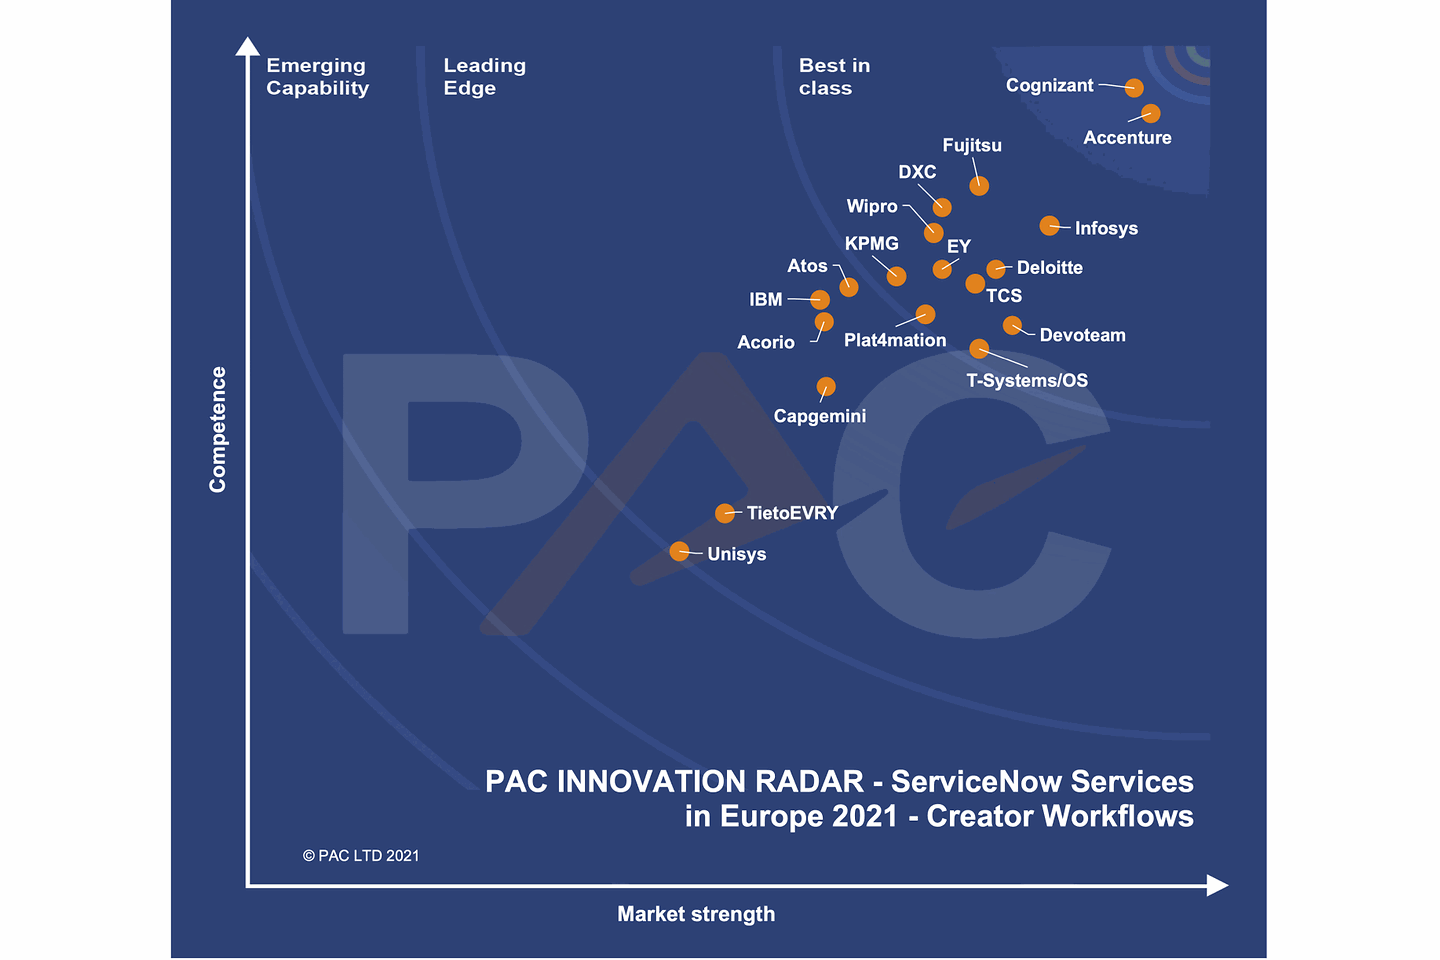 PAC Innovation Radar Graphic "Creator Workflows”